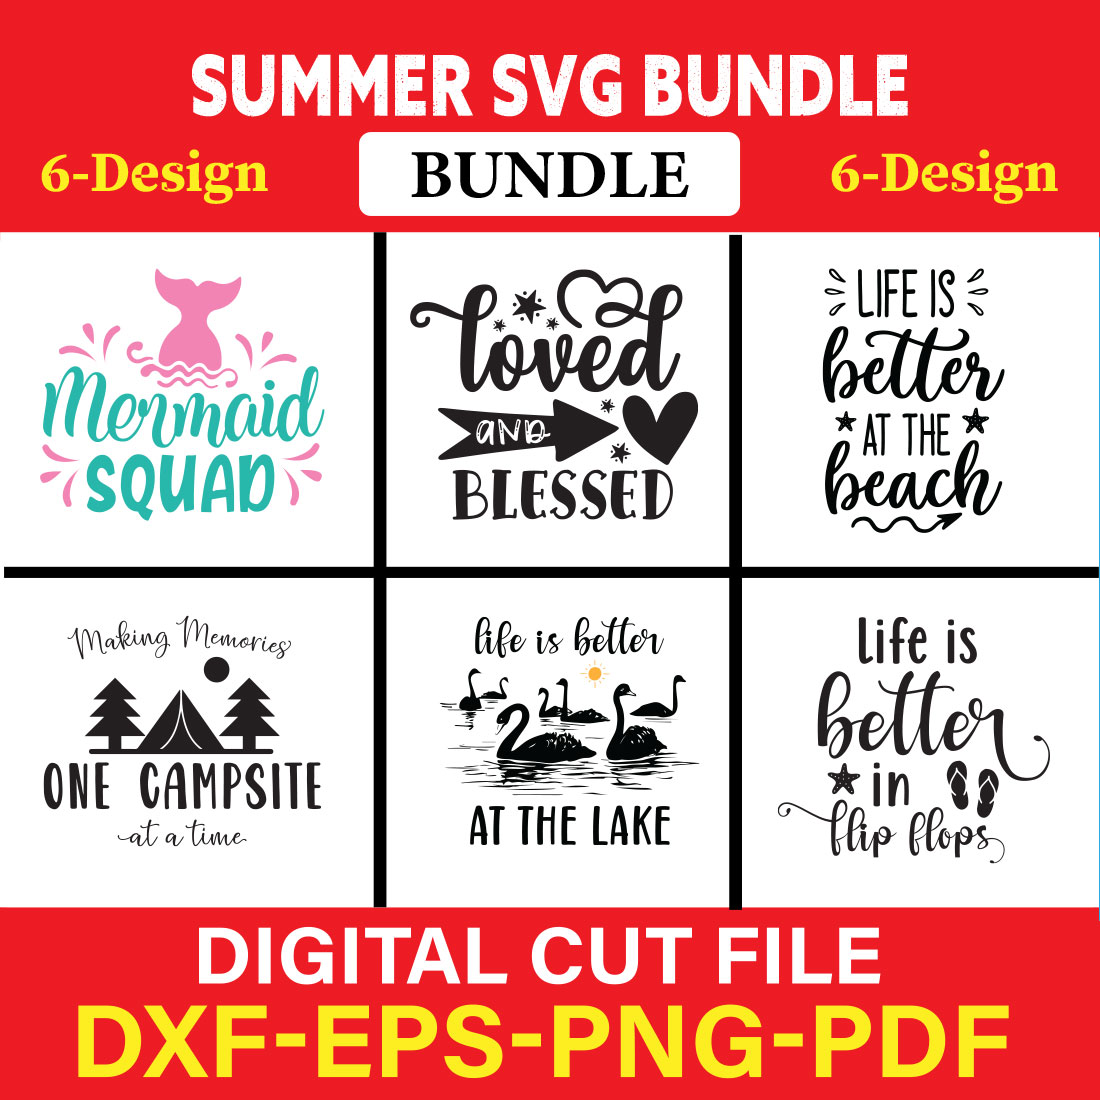 Summer T-shirt Design Bundle Vol-12 cover image.